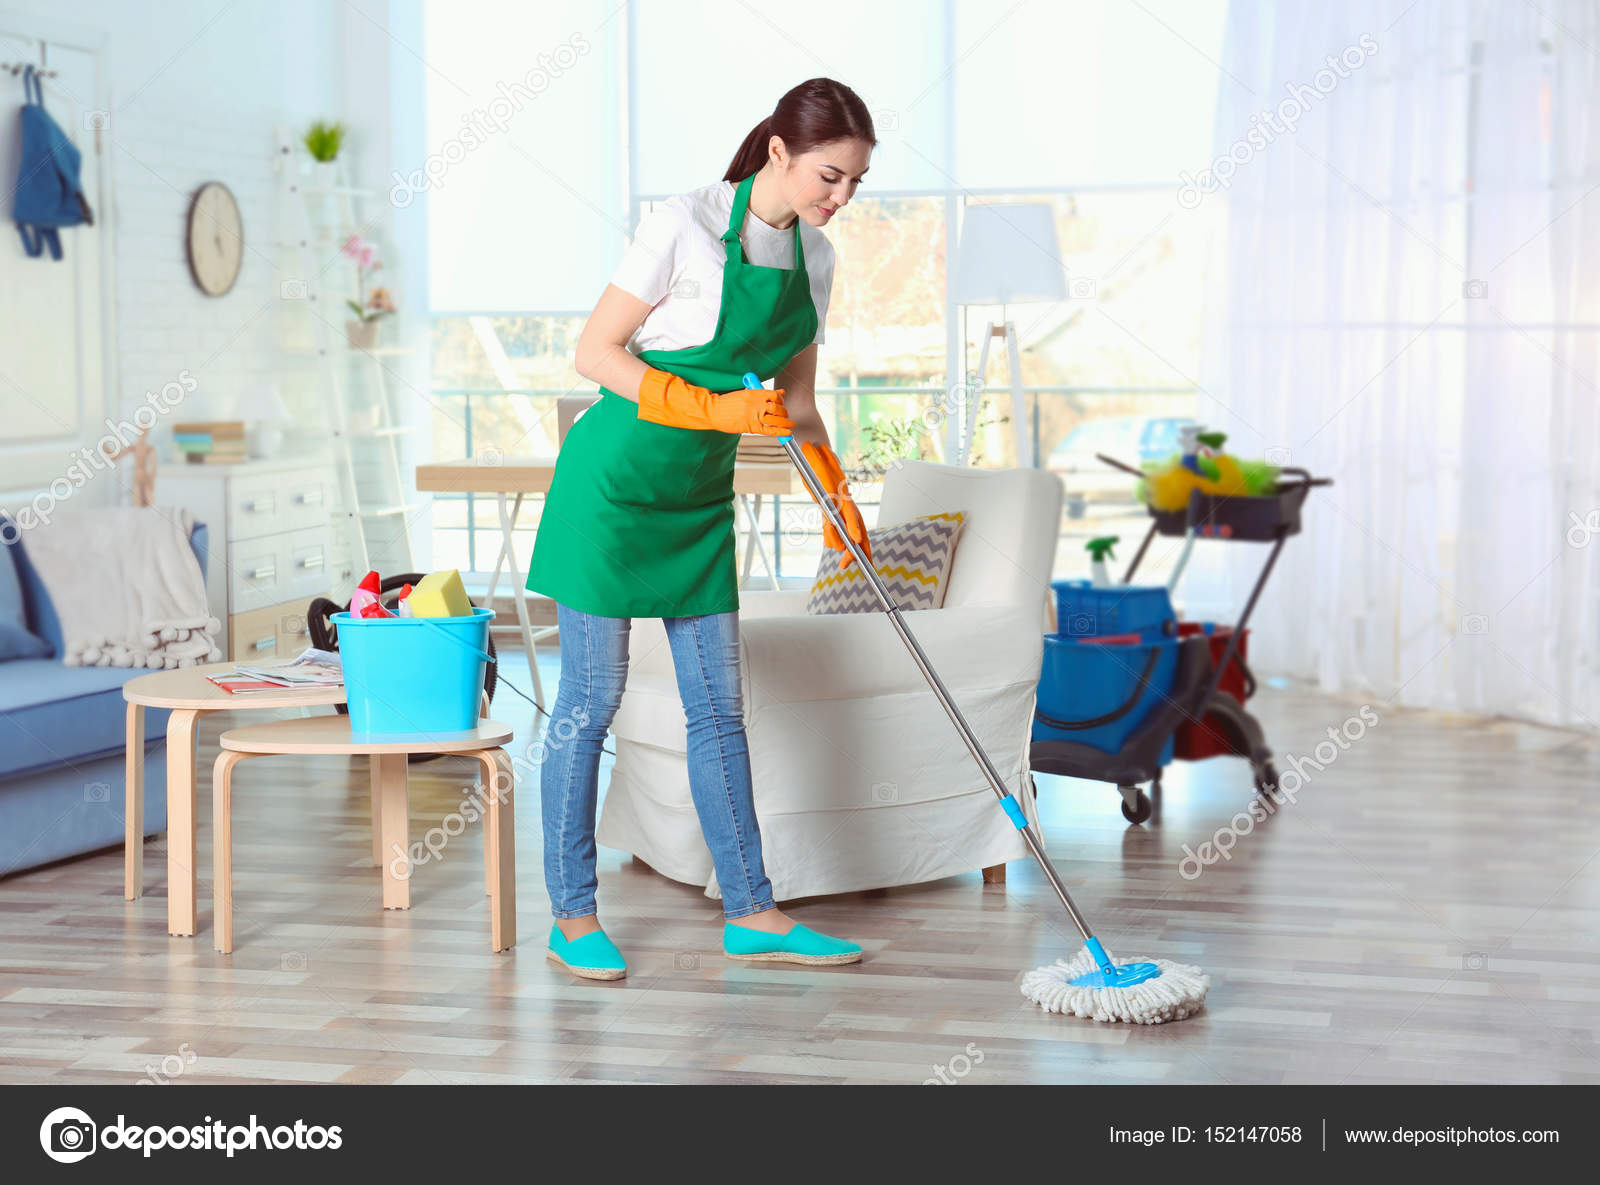 https://st3.depositphotos.com/1177973/15214/i/1600/depositphotos_152147058-stock-photo-young-female-cleaner.jpg